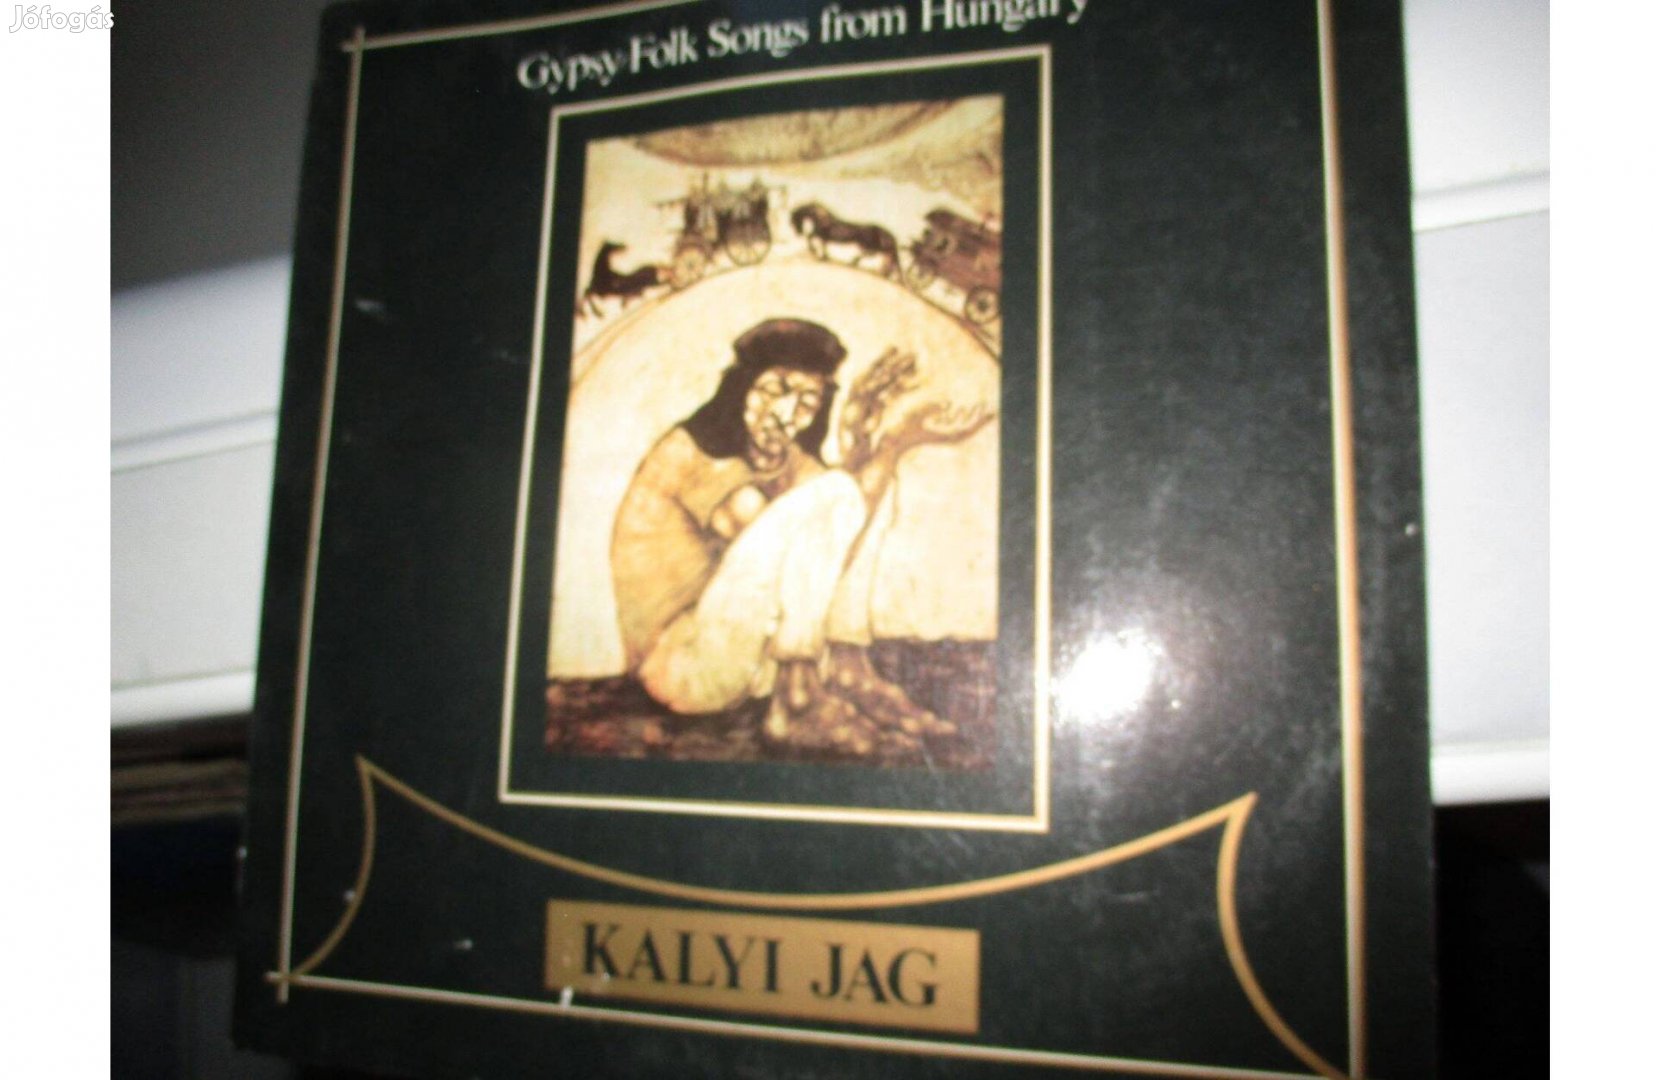 Gipsy Folk Songs bakelit hanglemez eladó